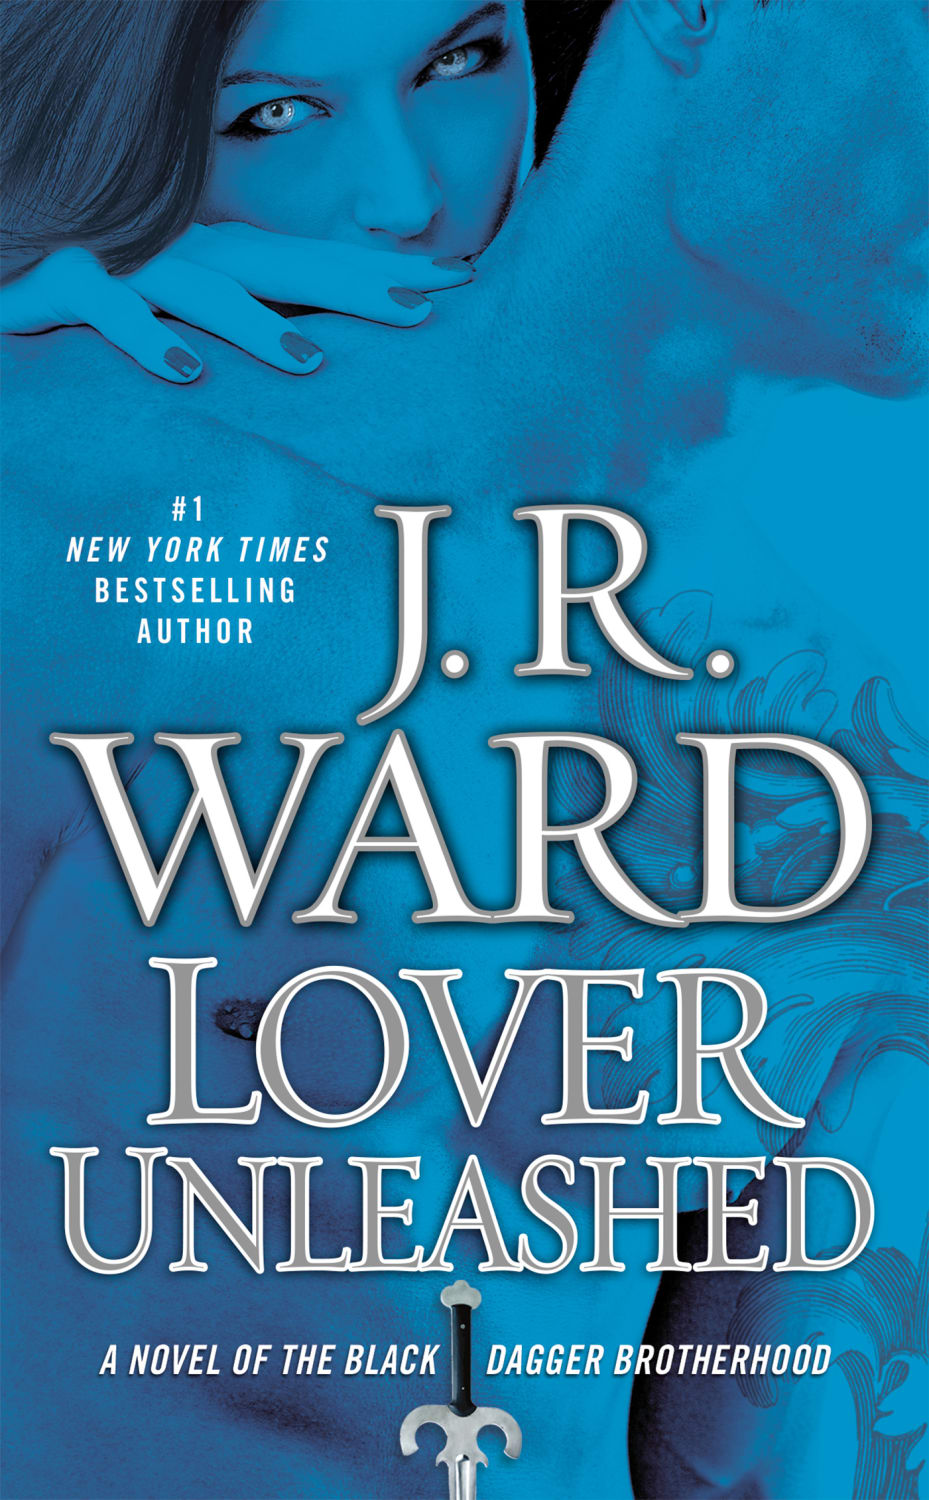 Lover Enshrined by J.R. Ward